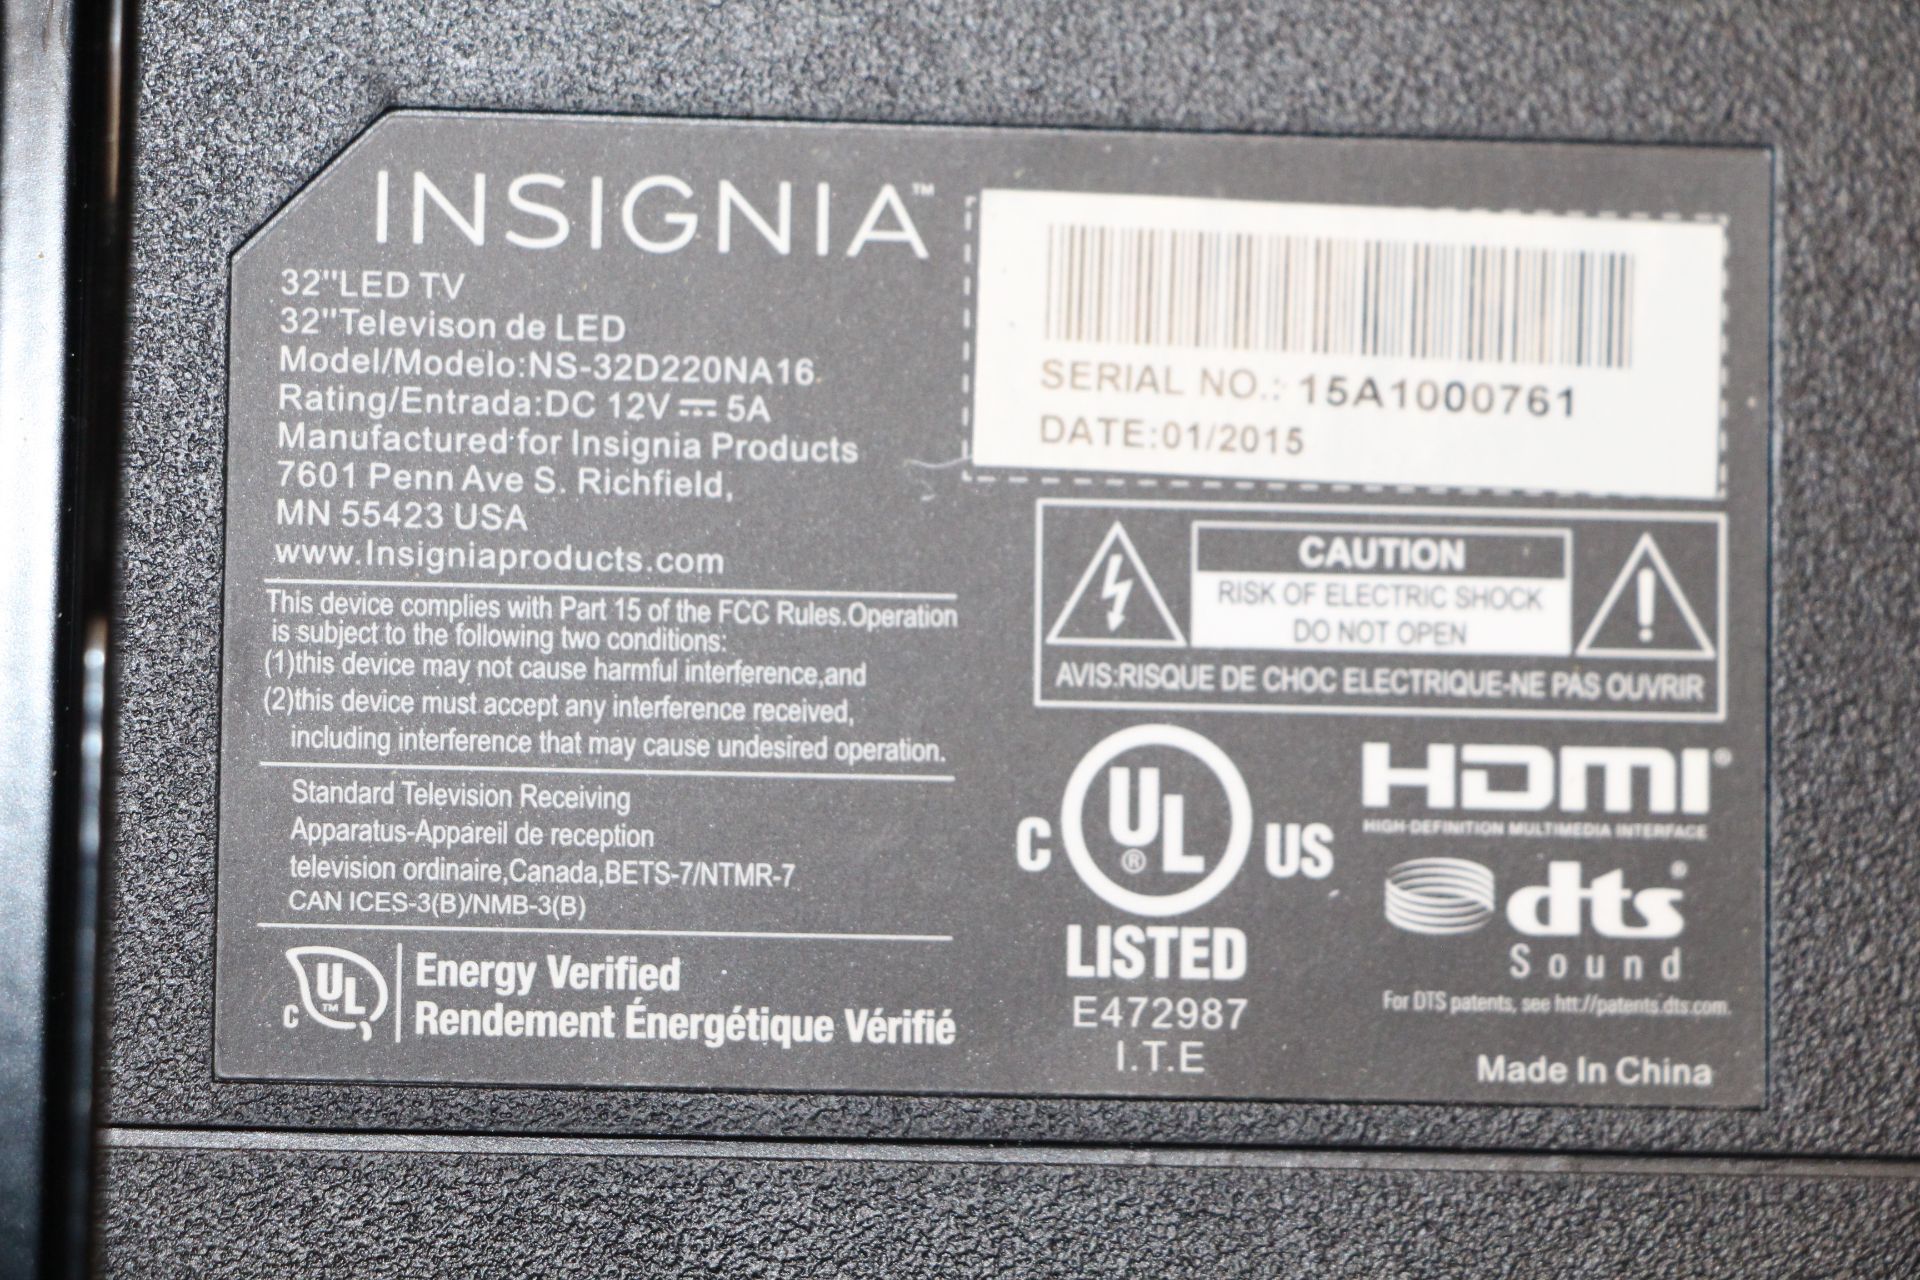 Insignia 32" LED TV Model NS-32D220NA18 - Image 2 of 2